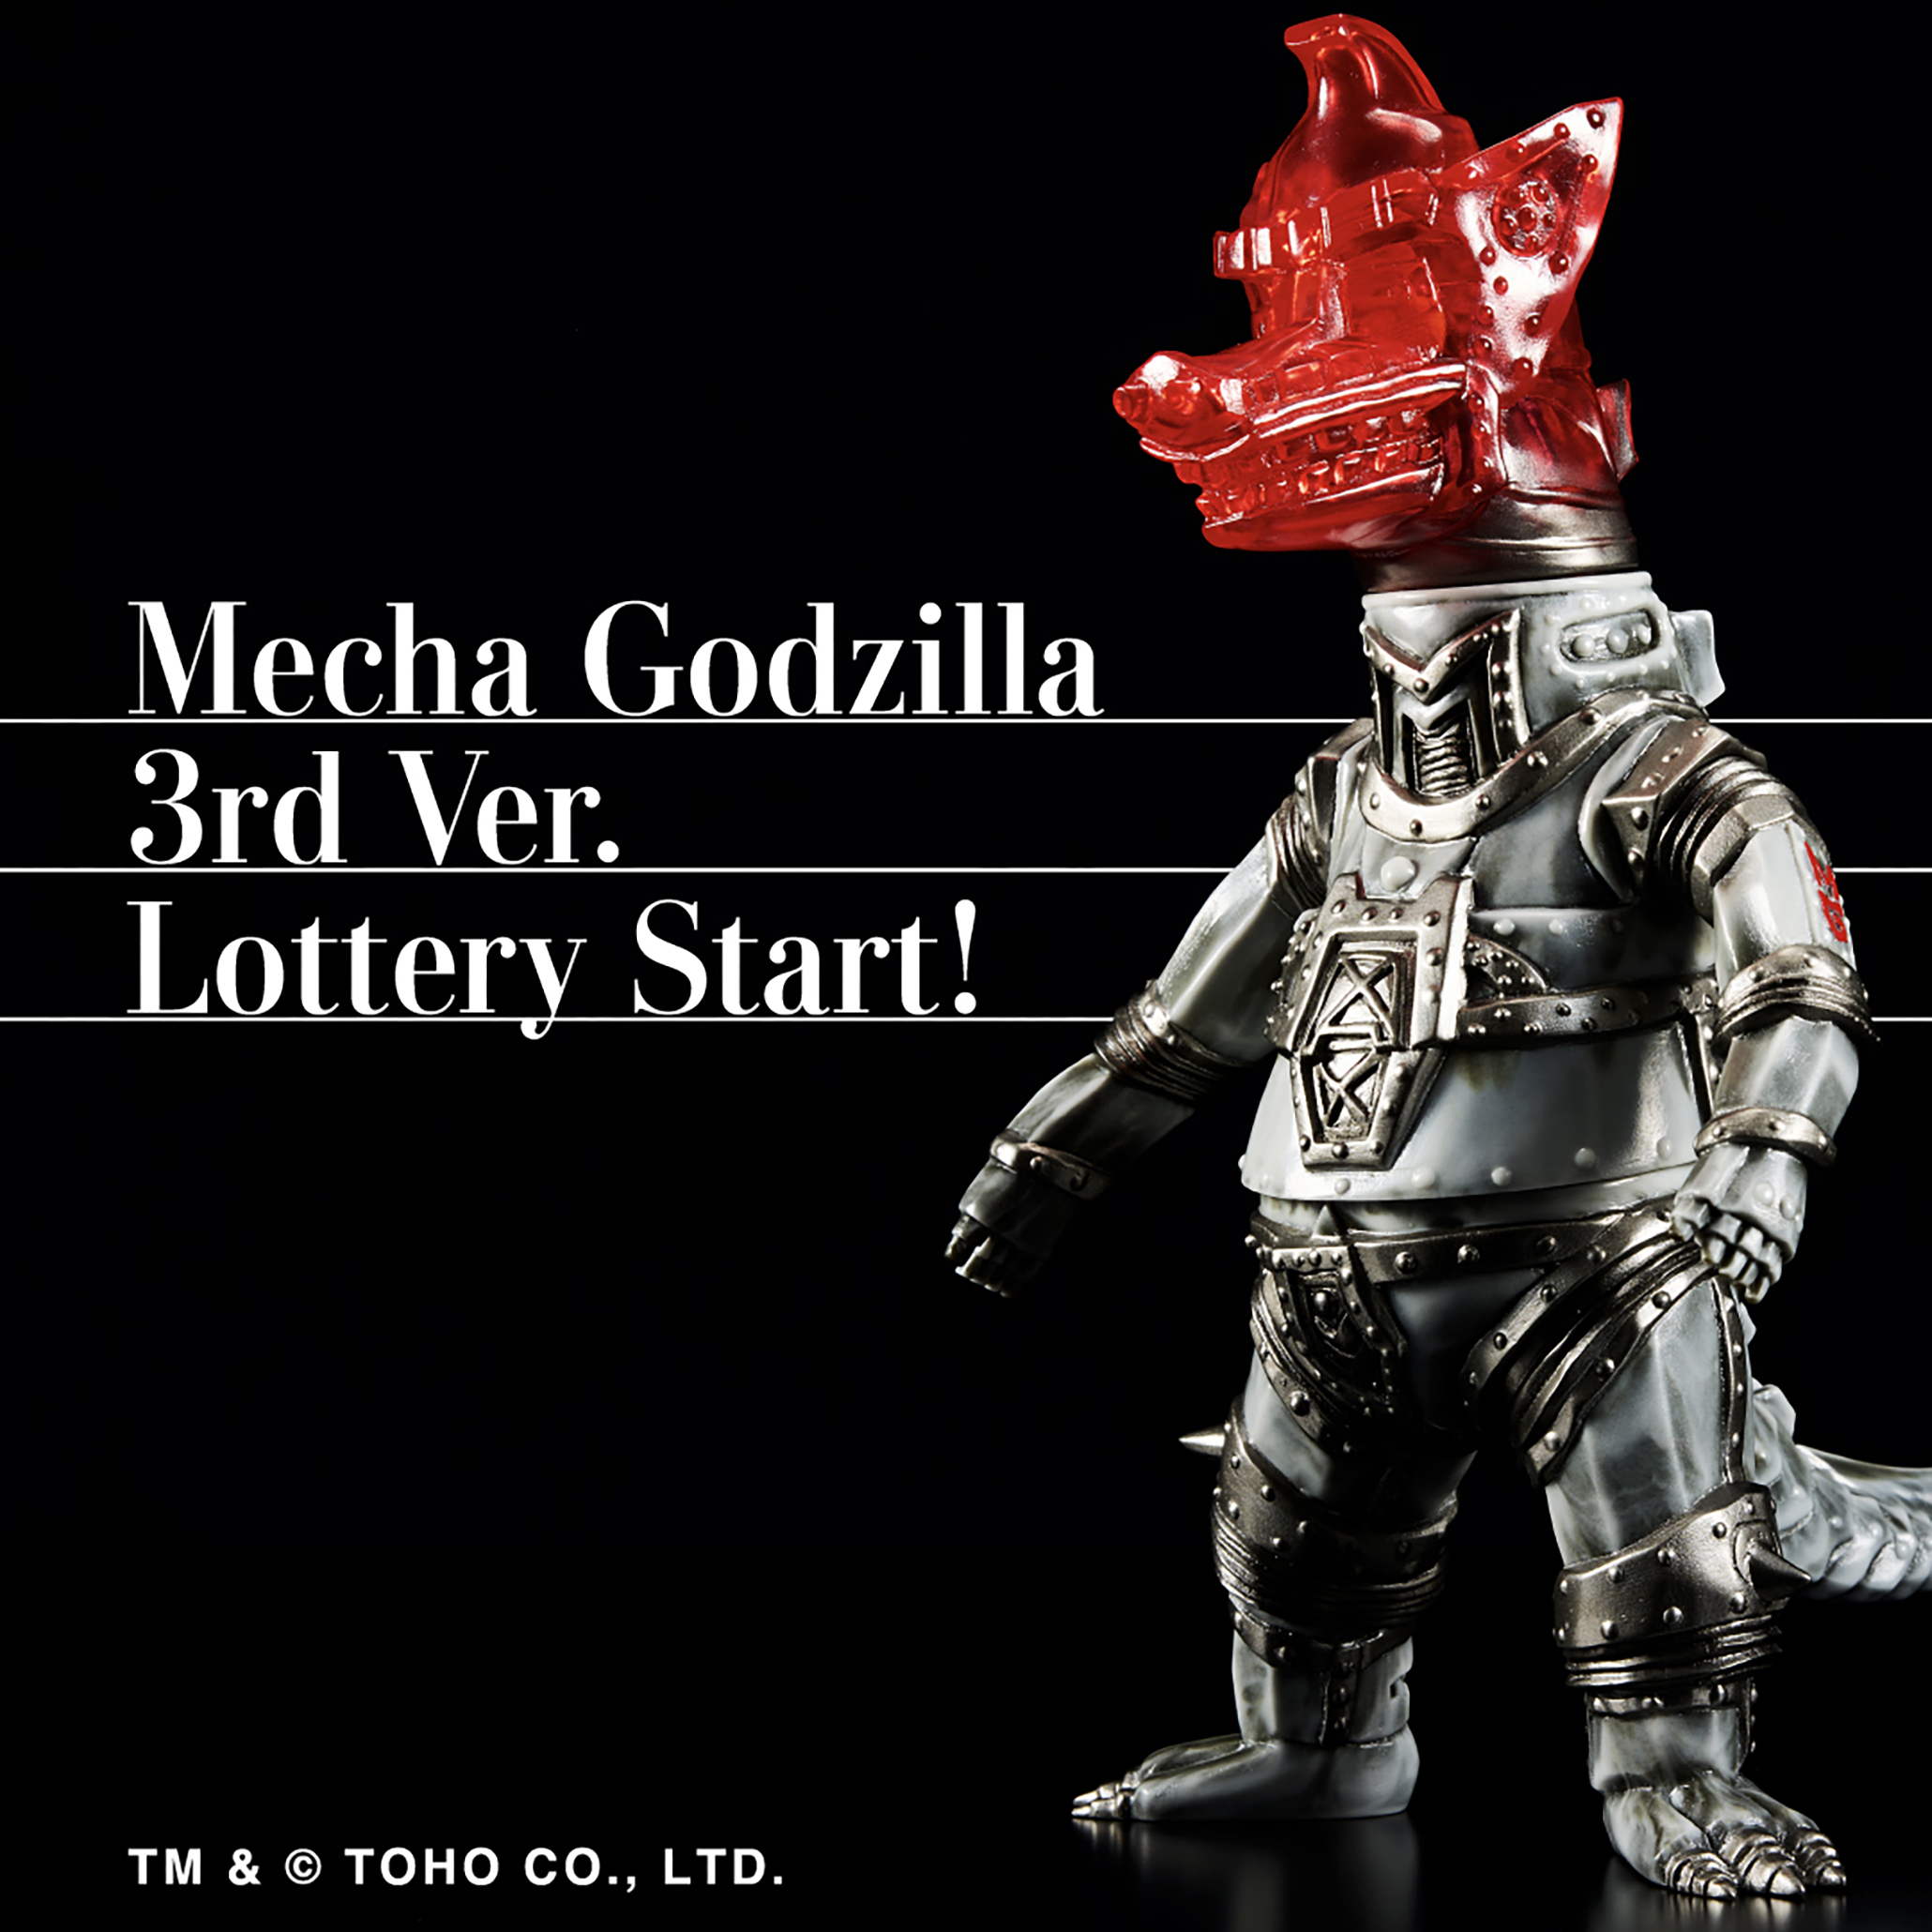 Mecha Godzilla Designed by SwimmyDesignLab 3rd ver.